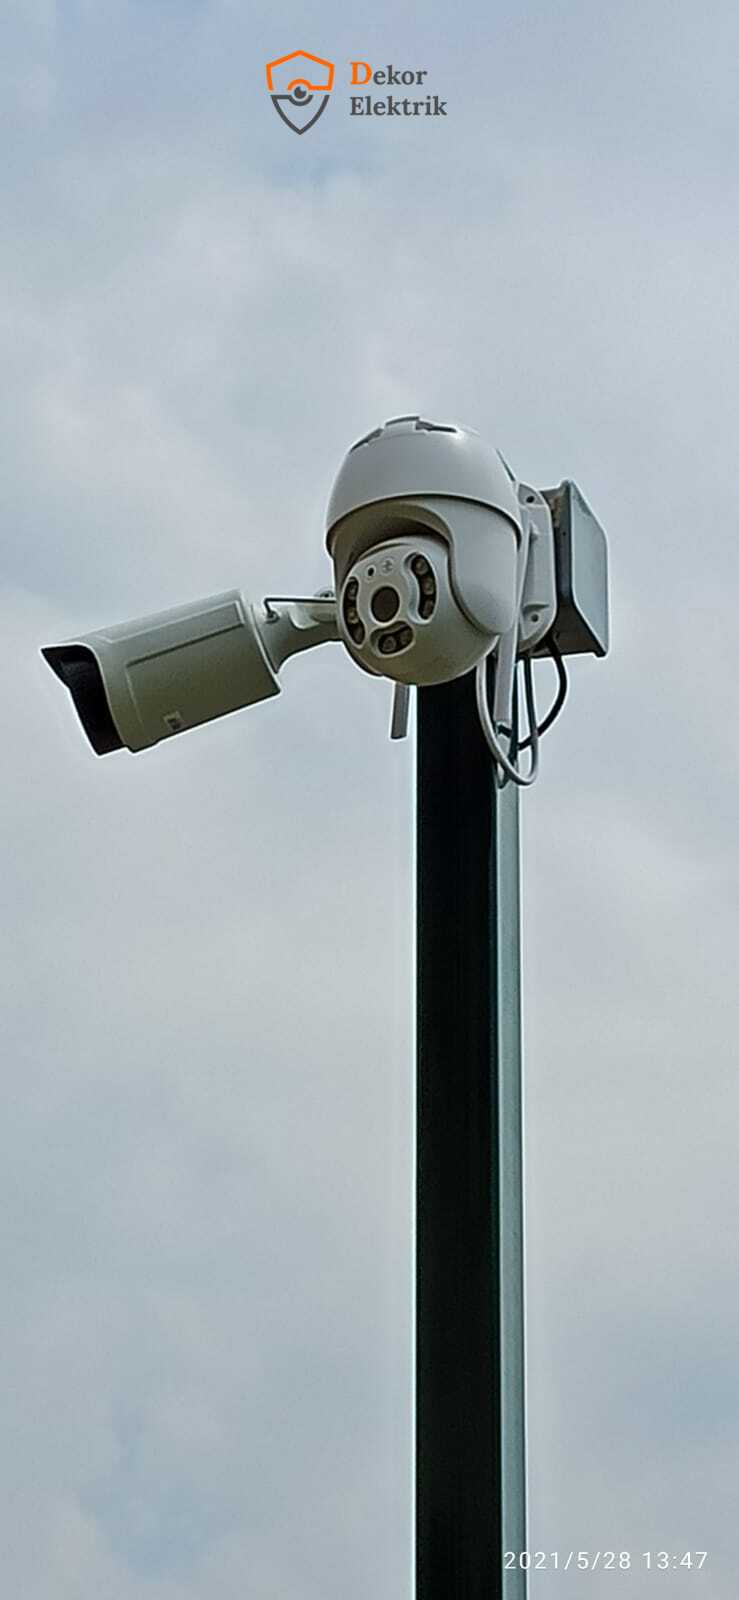 Kartal Güvenlik Kamerası Referans